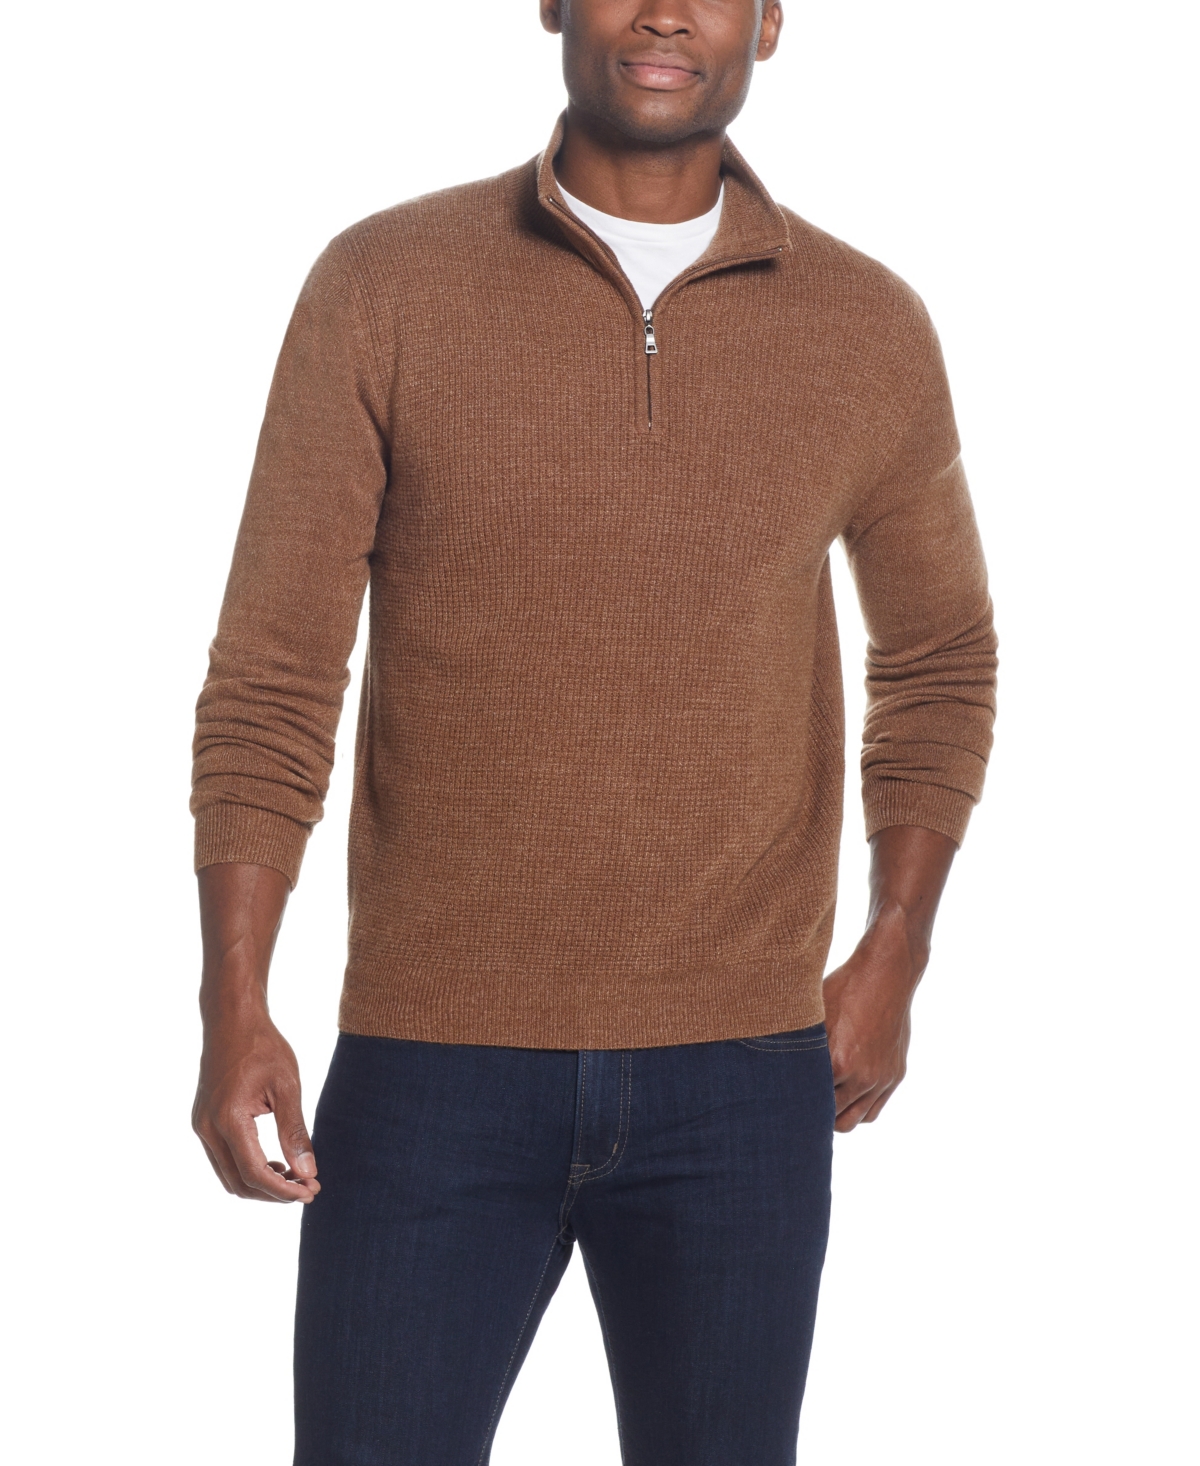 Men's Soft Touch Textured Quarter-Zip Sweater - Pewter Heather